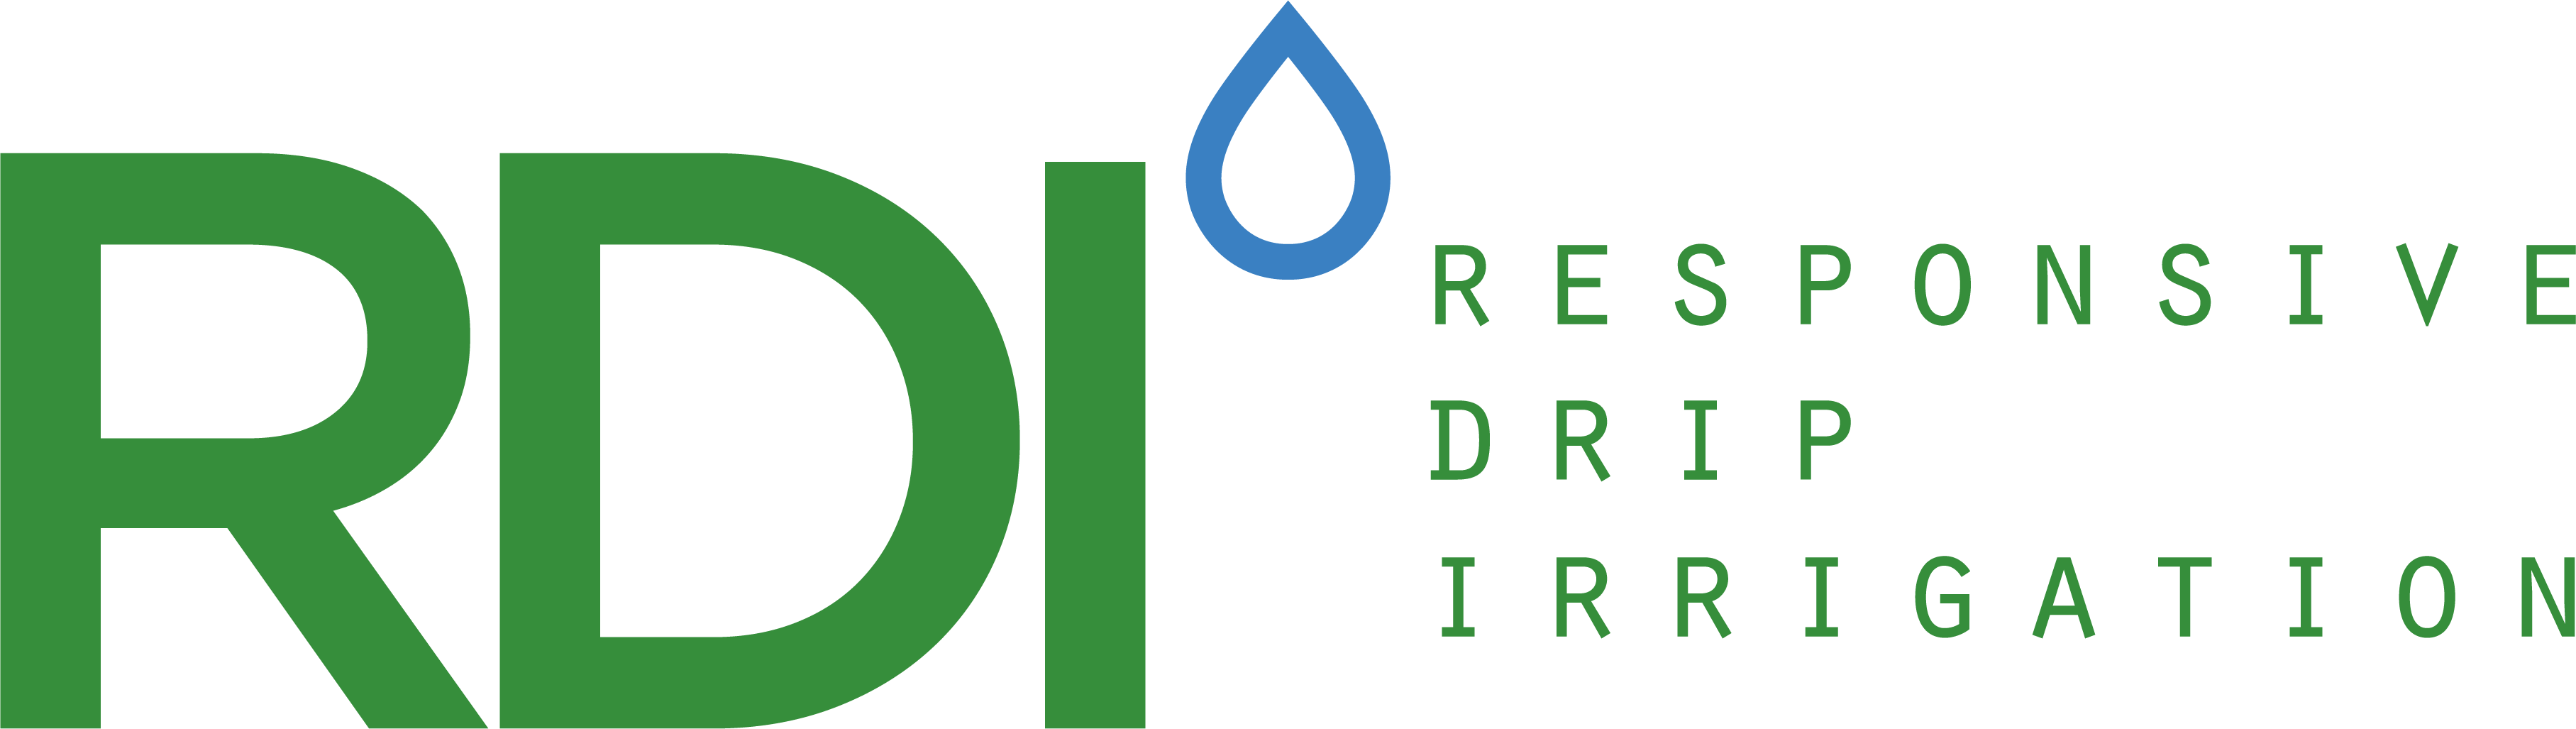 Responsive Drip Irrigation